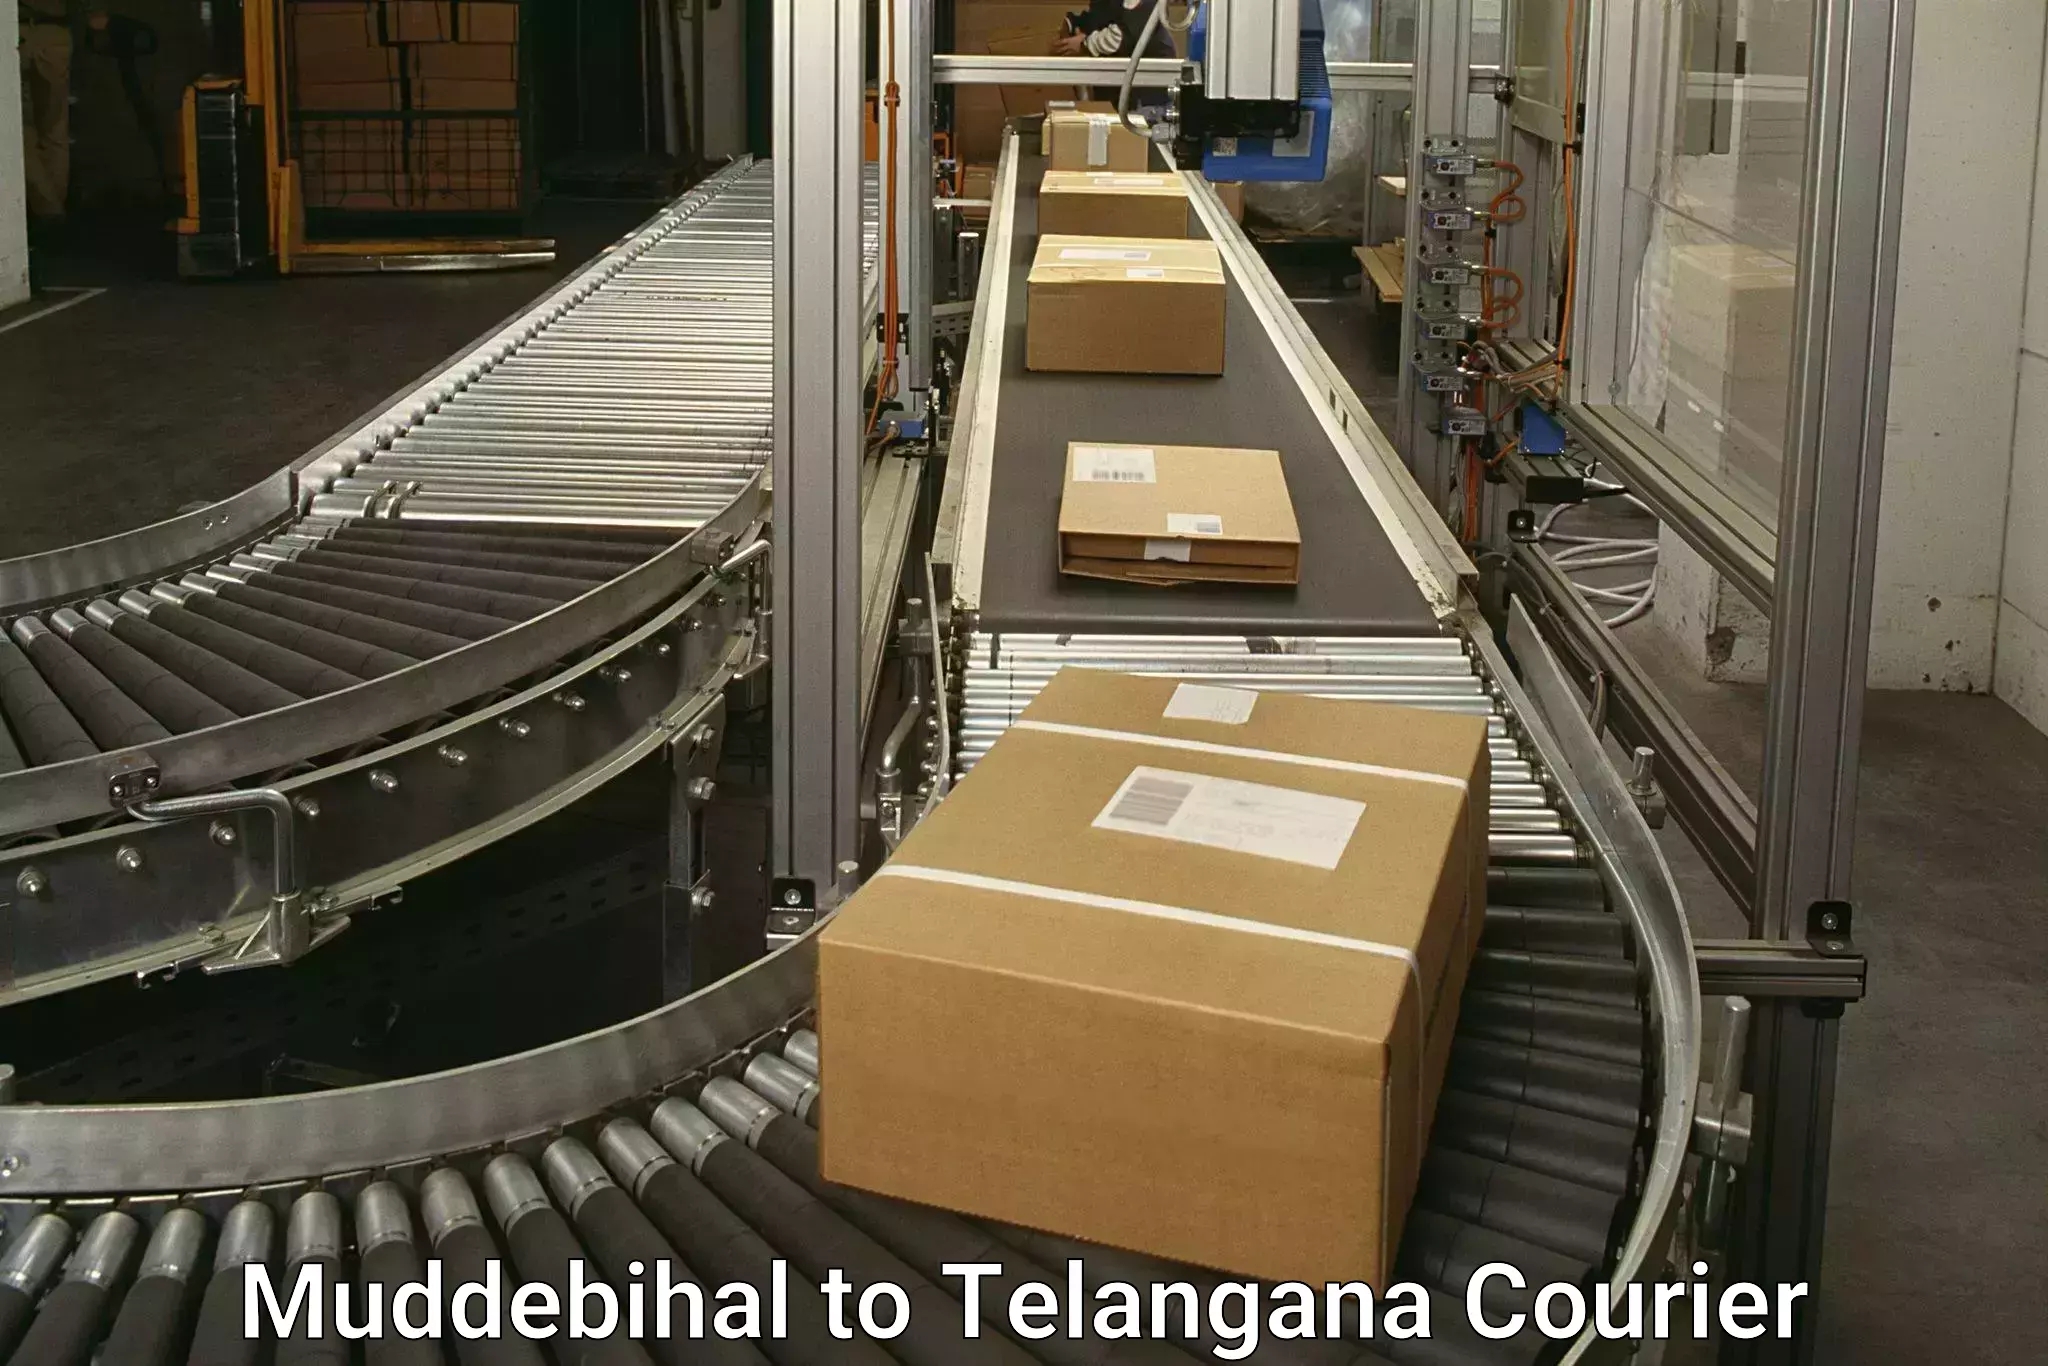 Urgent courier needs in Muddebihal to Yellandu